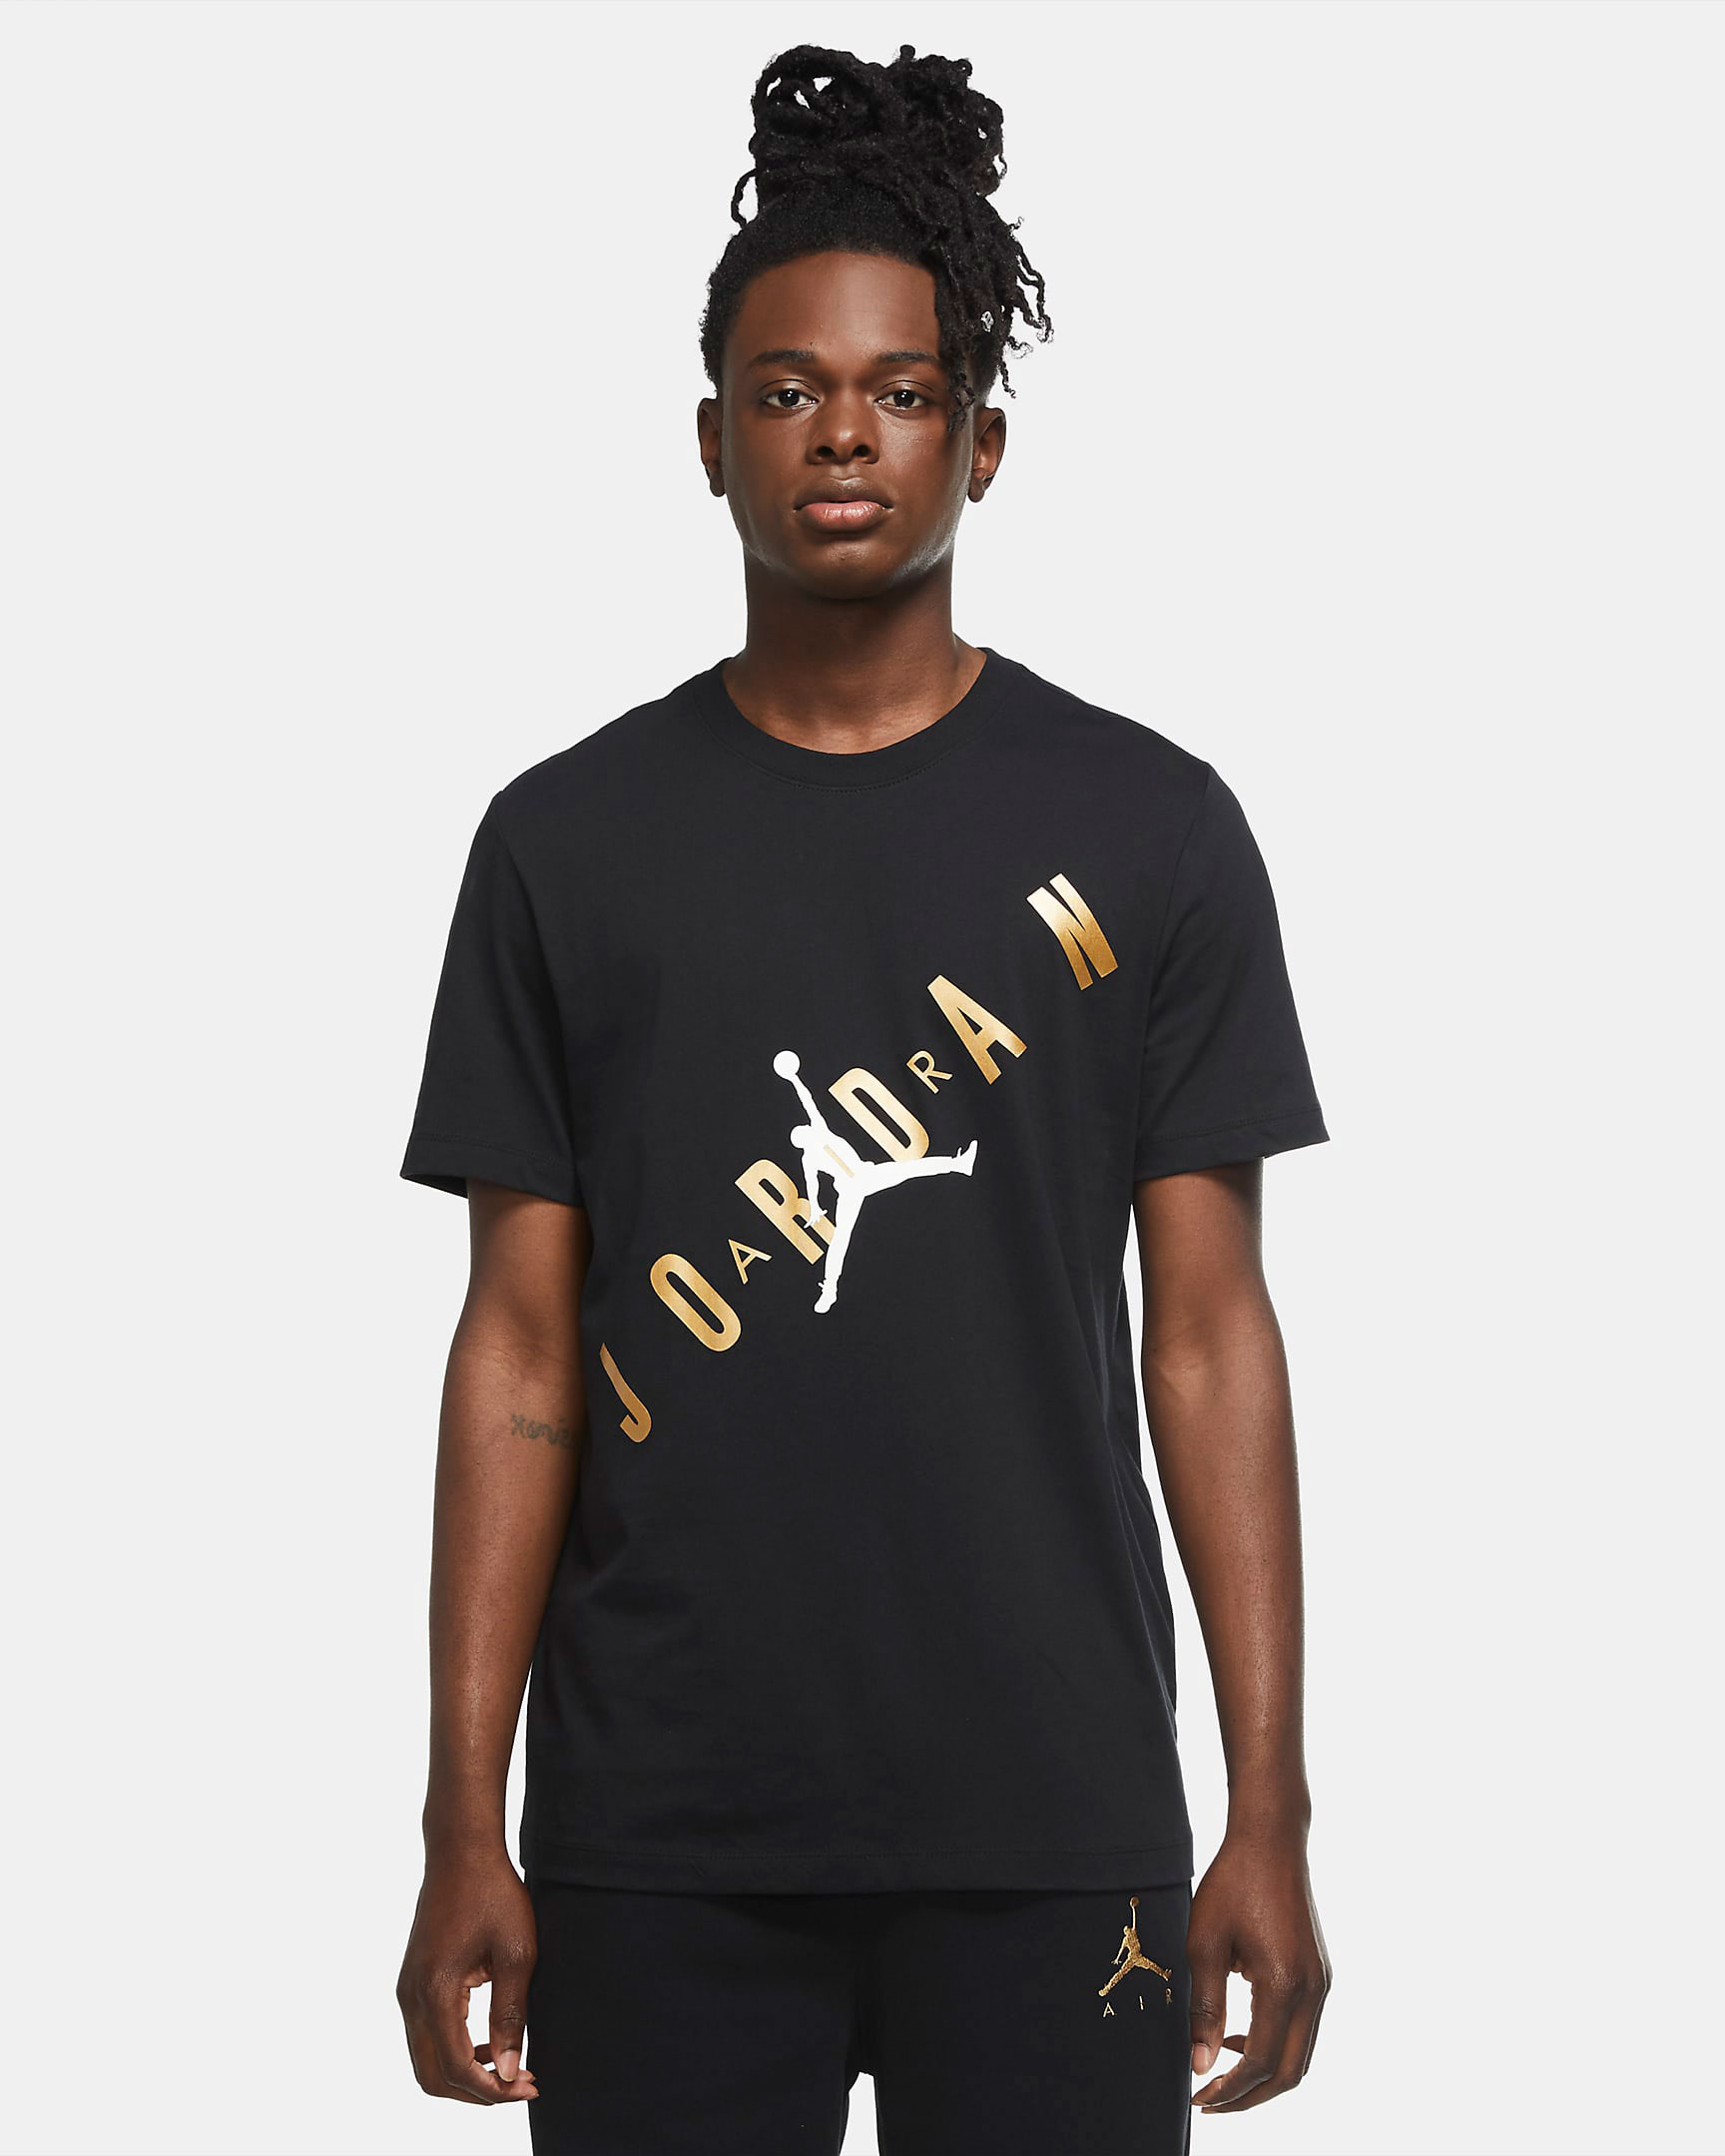 New Jordan Brand Shirts for Fall 2020 